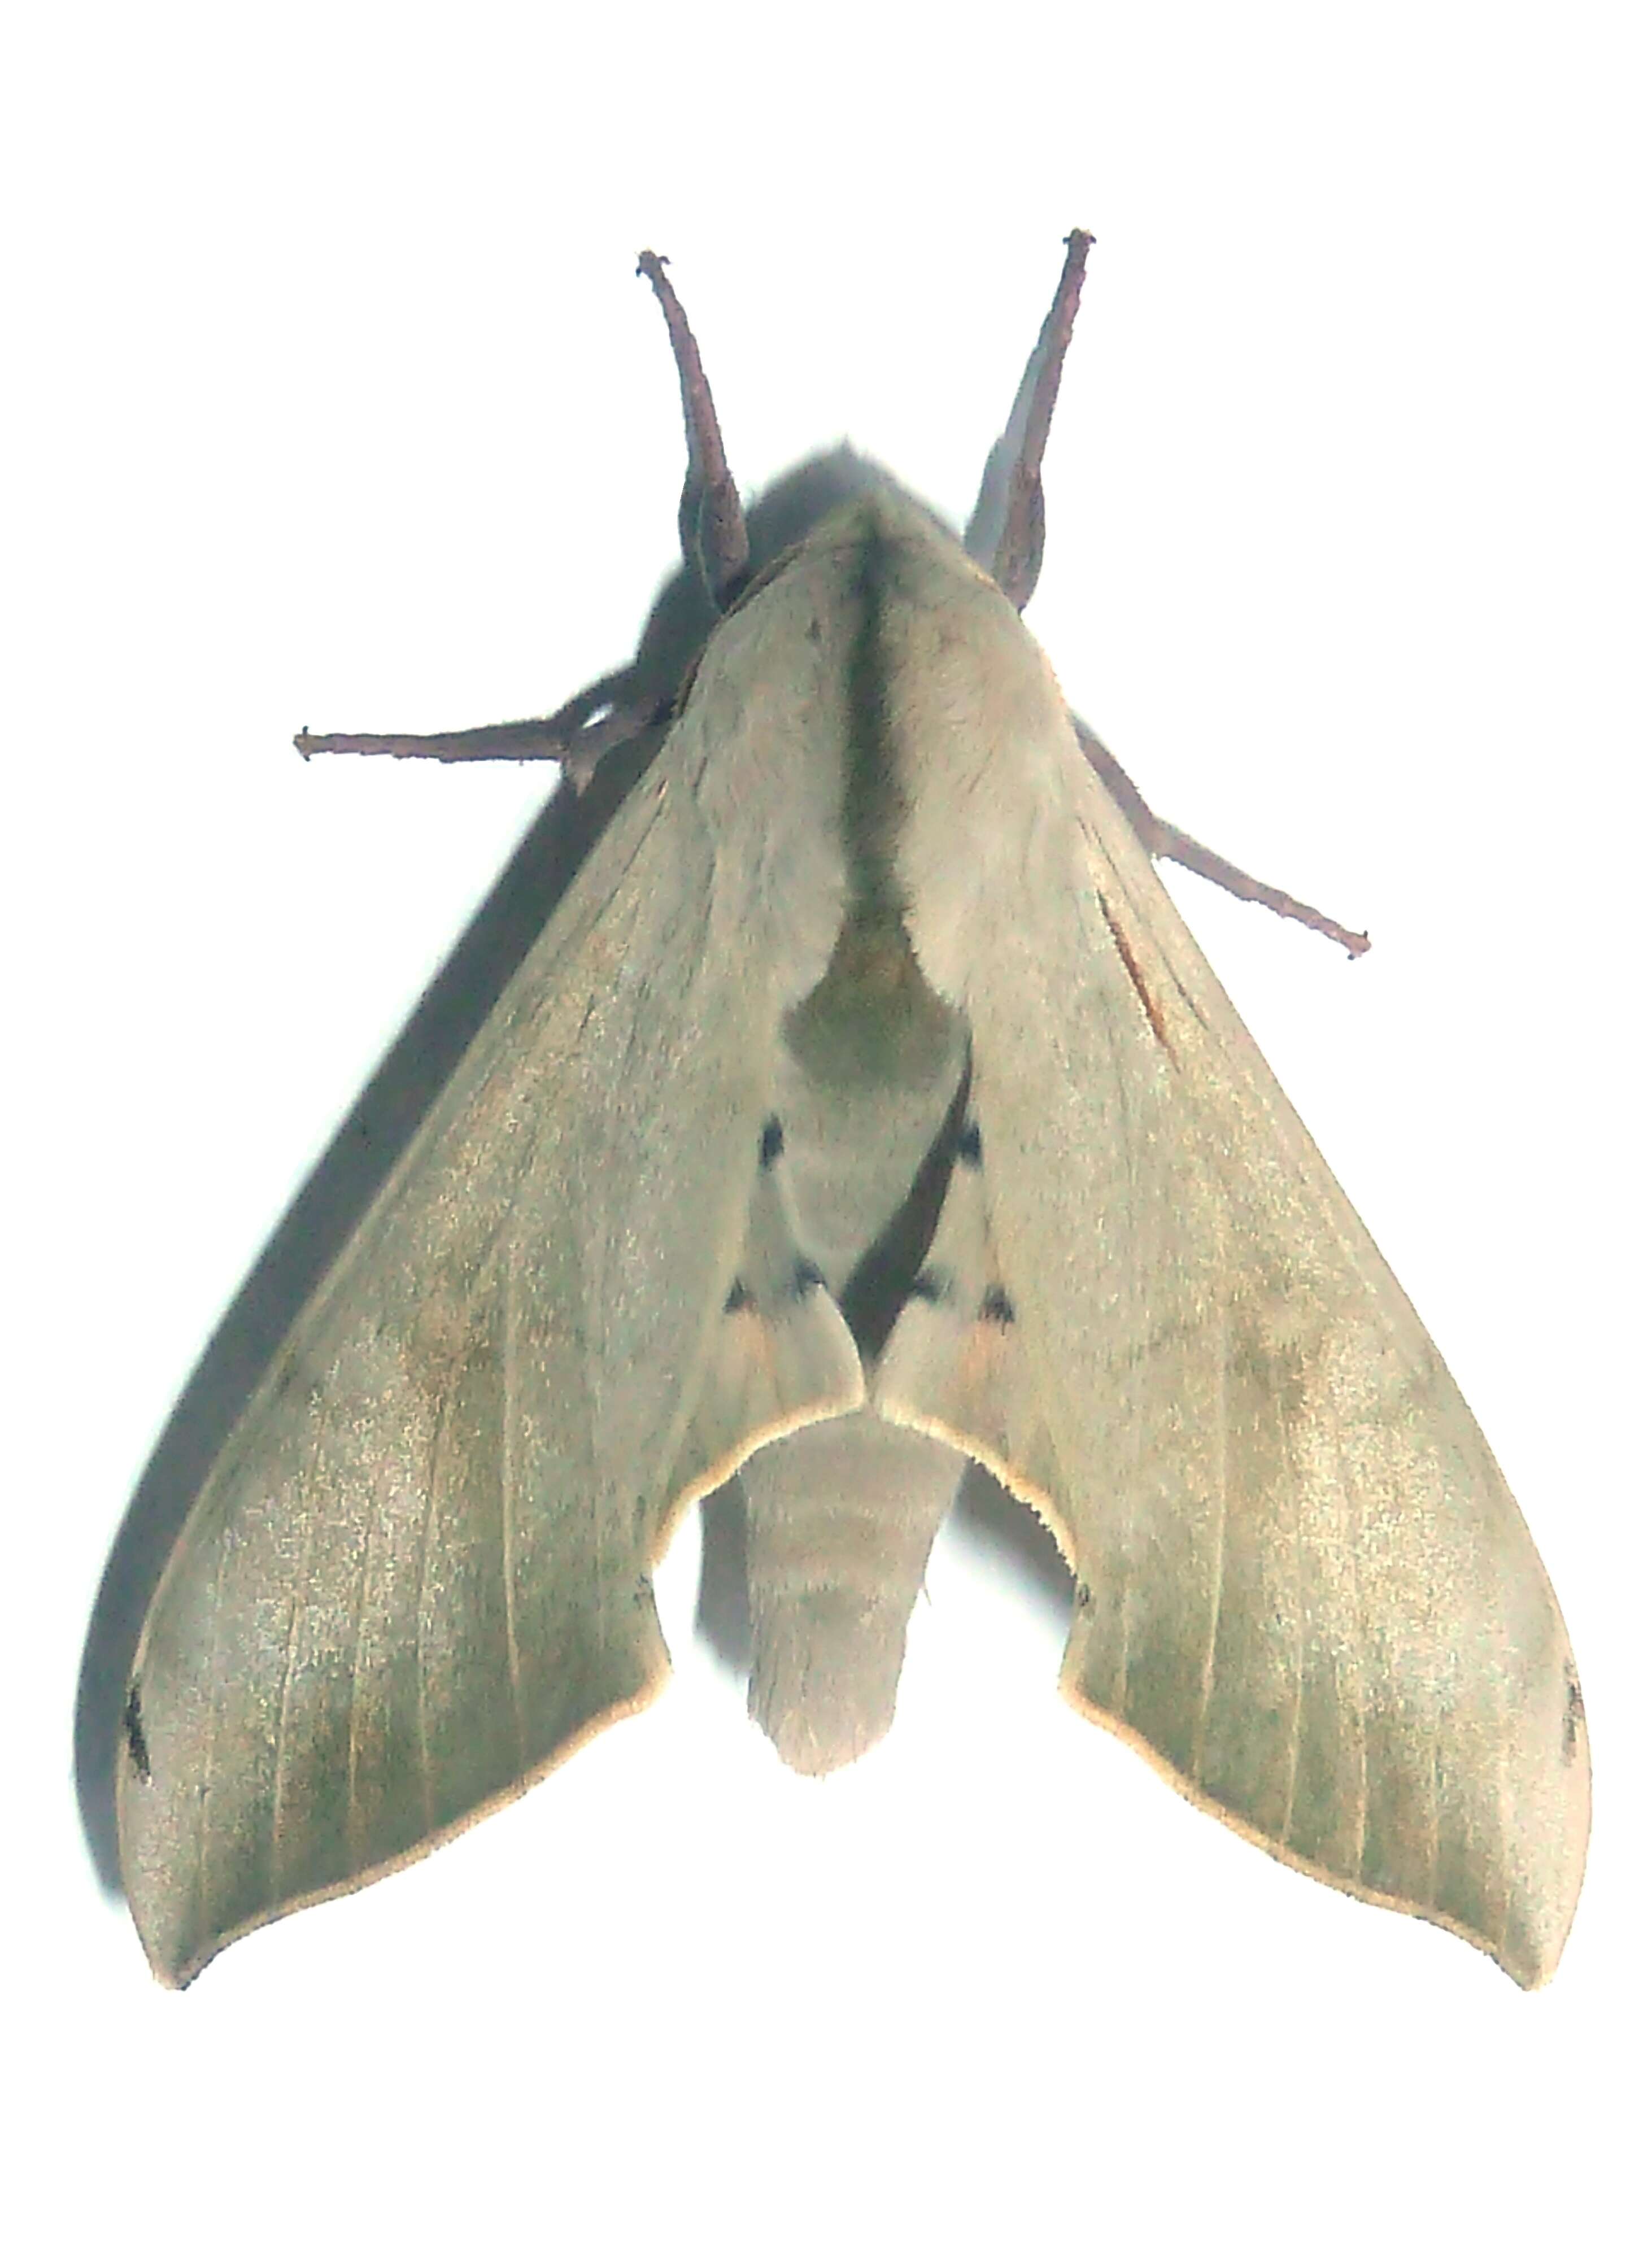 Image of Pseudoclanis postica (Walker 1856)